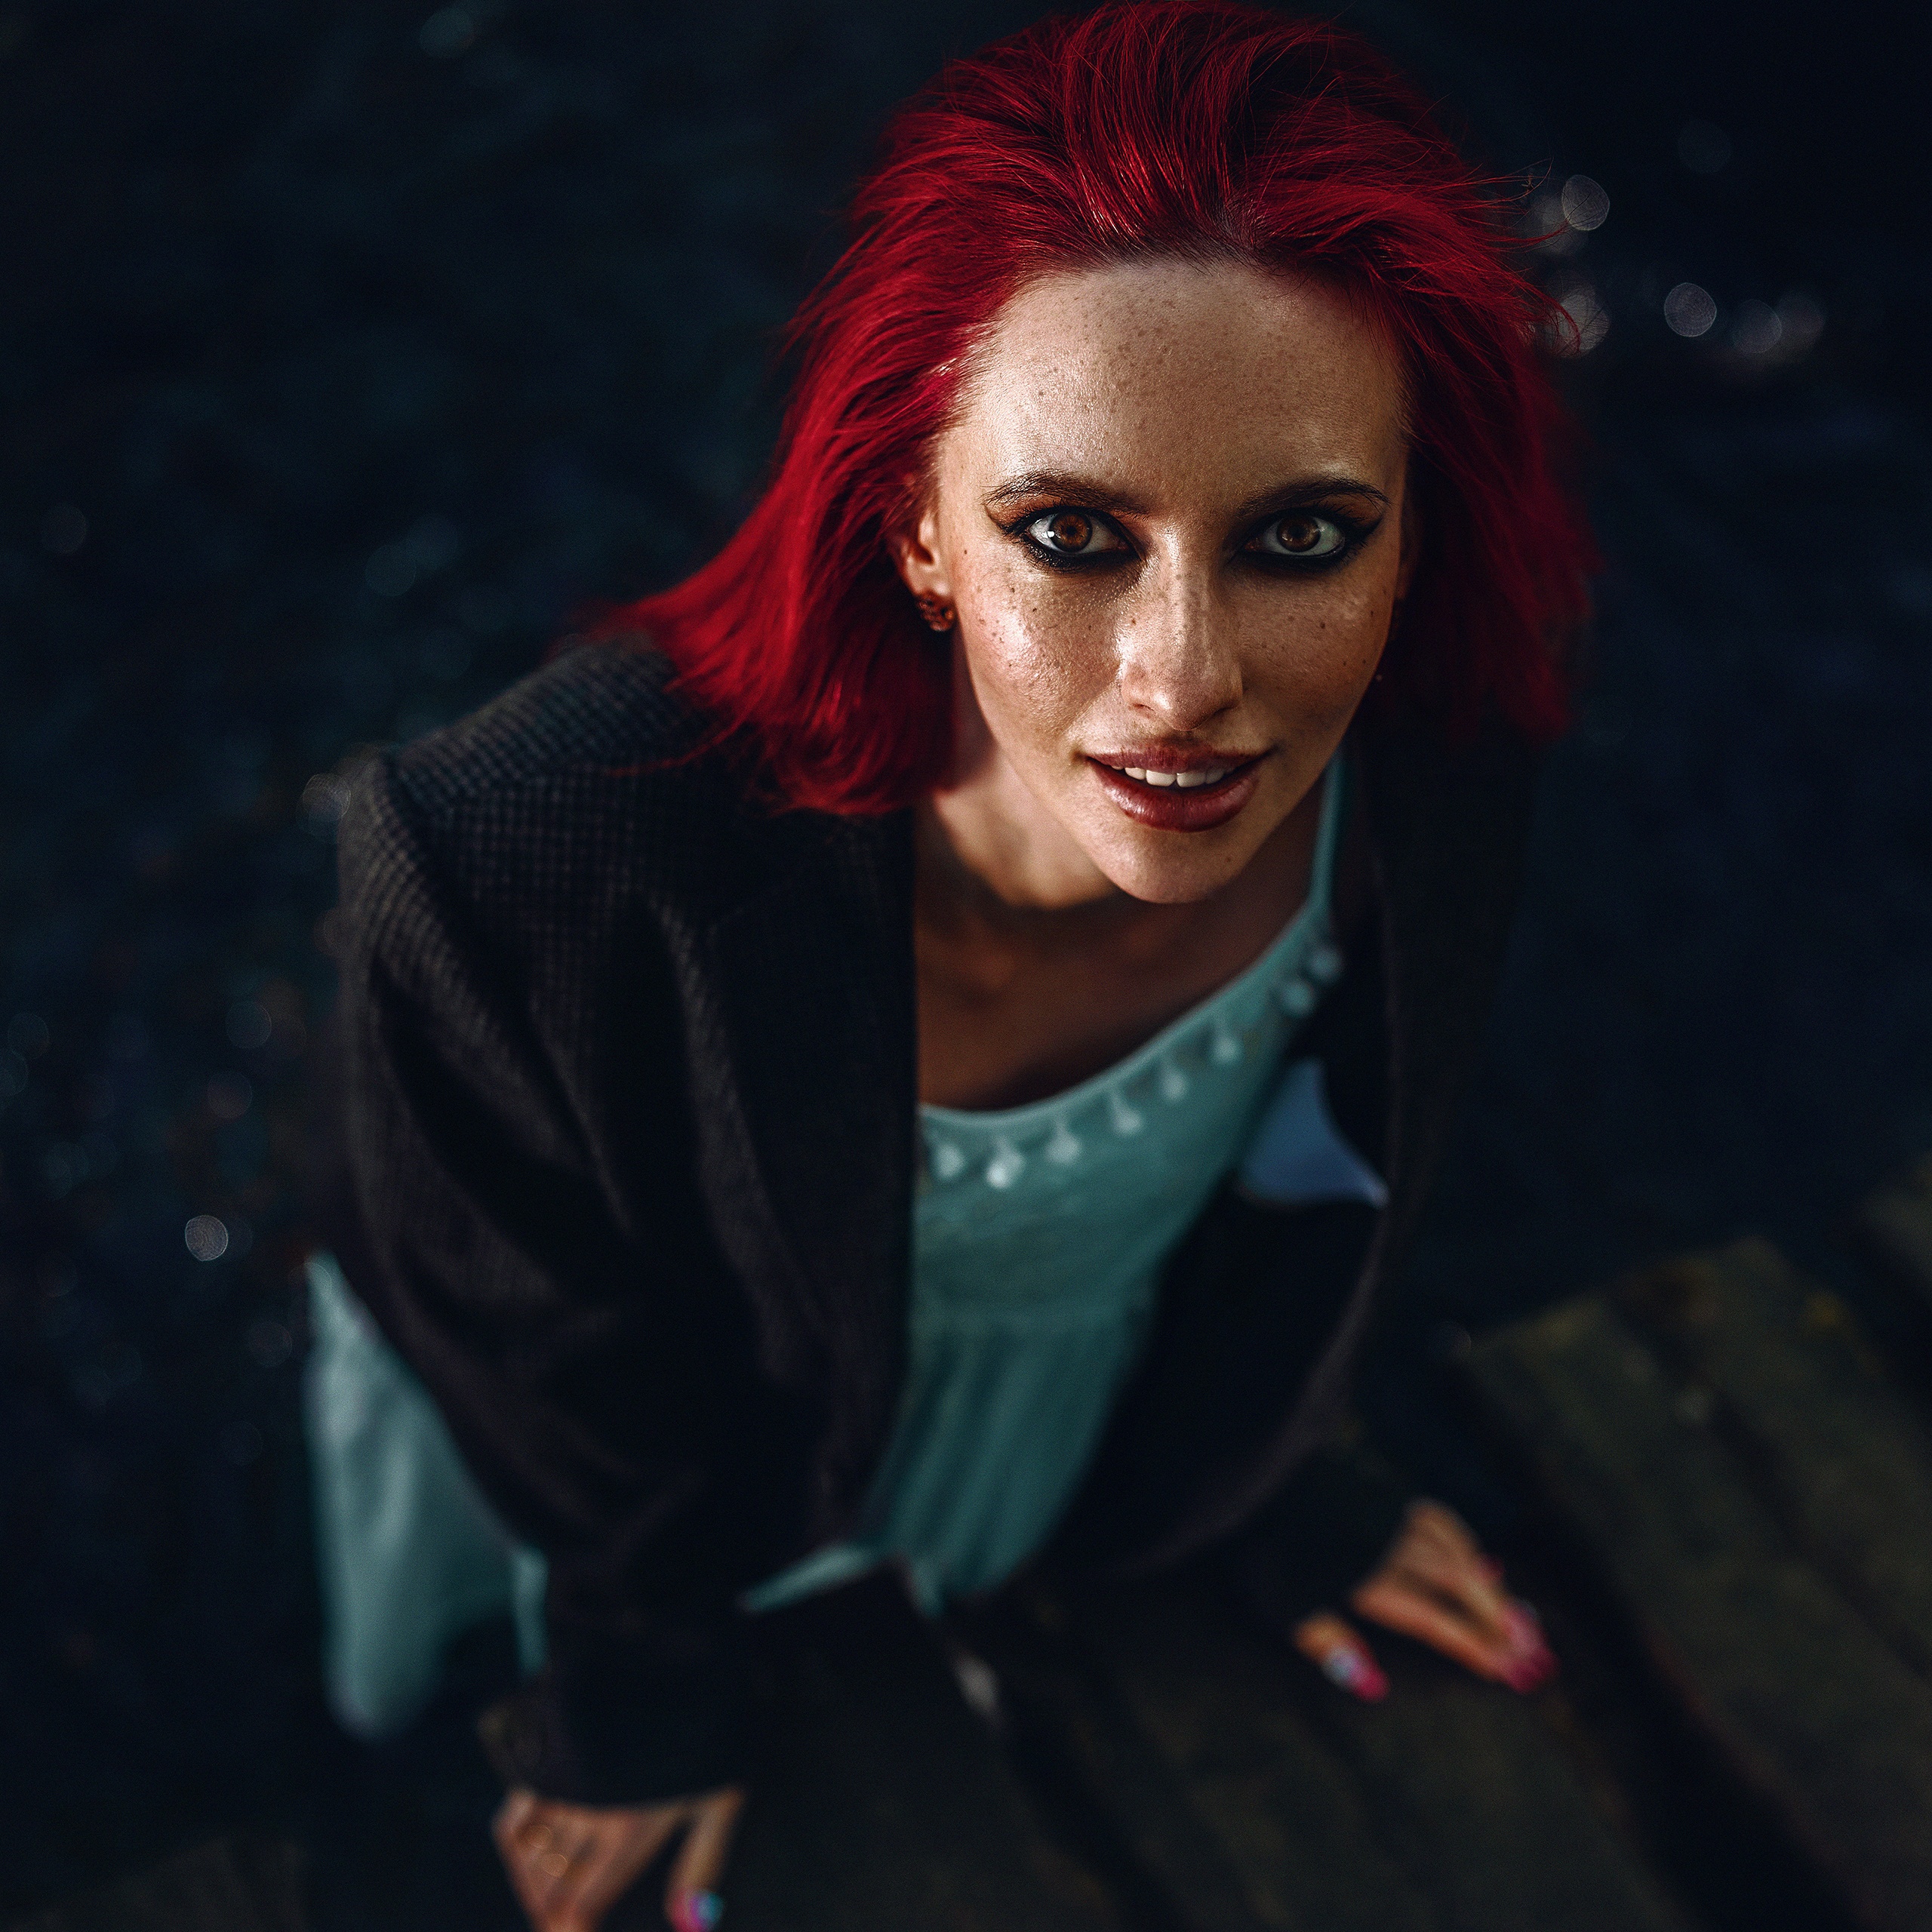 Alex Wolf Women Redhead Makeup High Angle Portrait 2560x2560